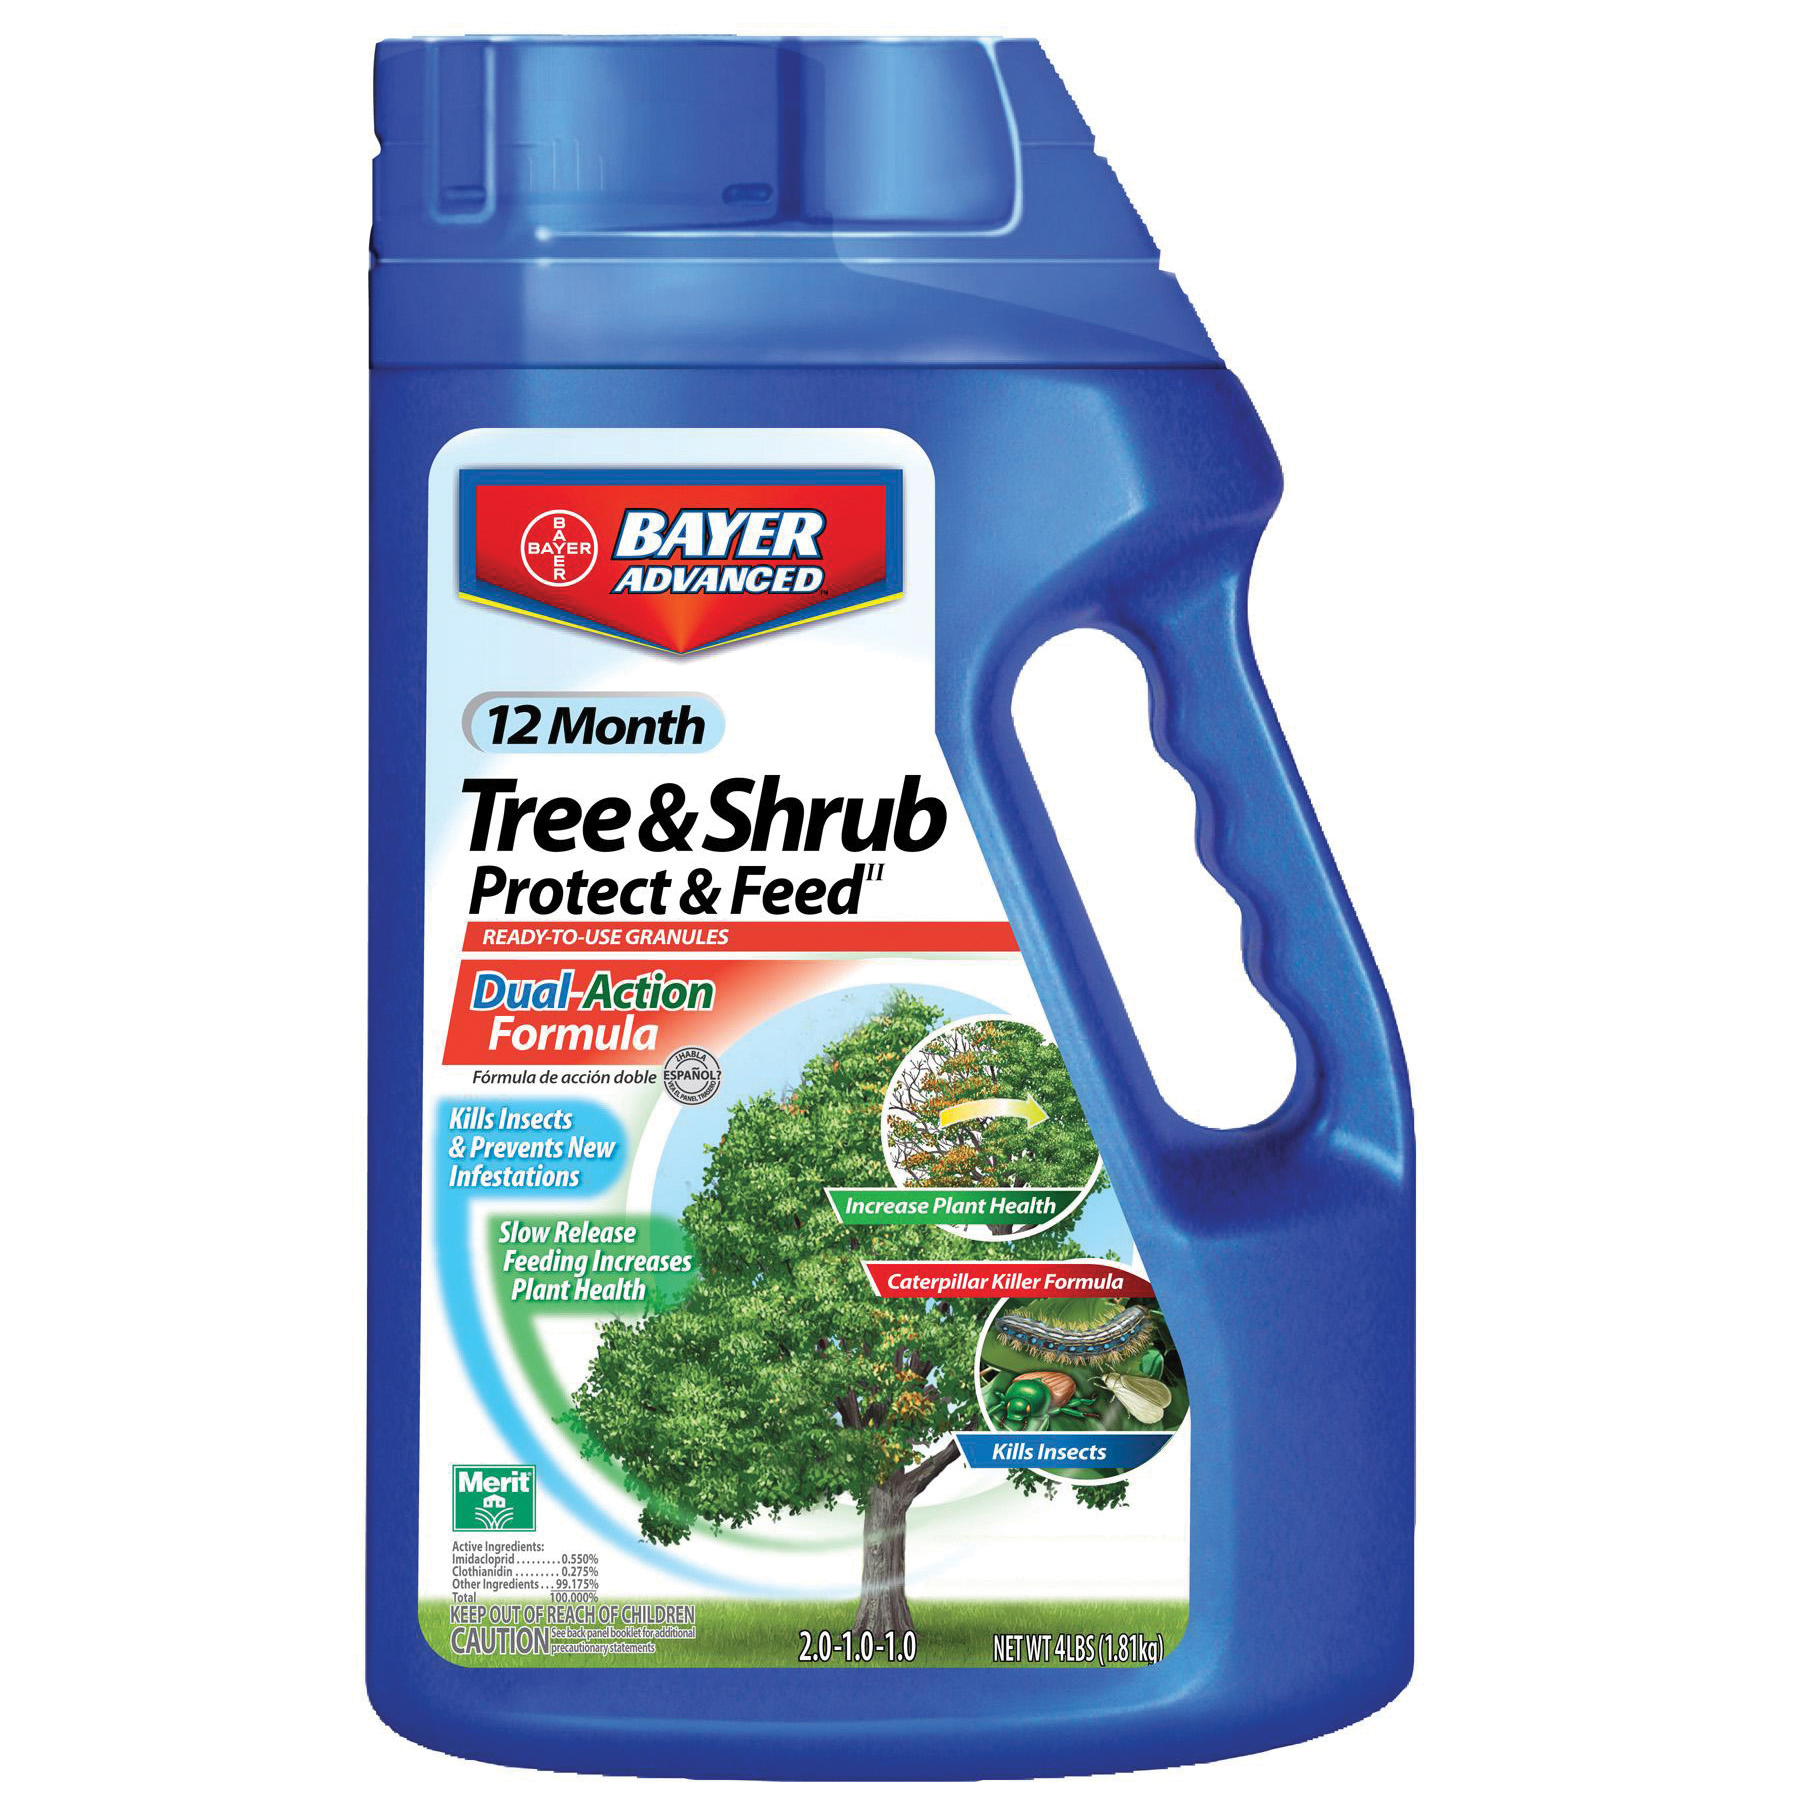 Bayer BAY701700B 4# 12 Month Tree & Shrub Protect & Feed Gran